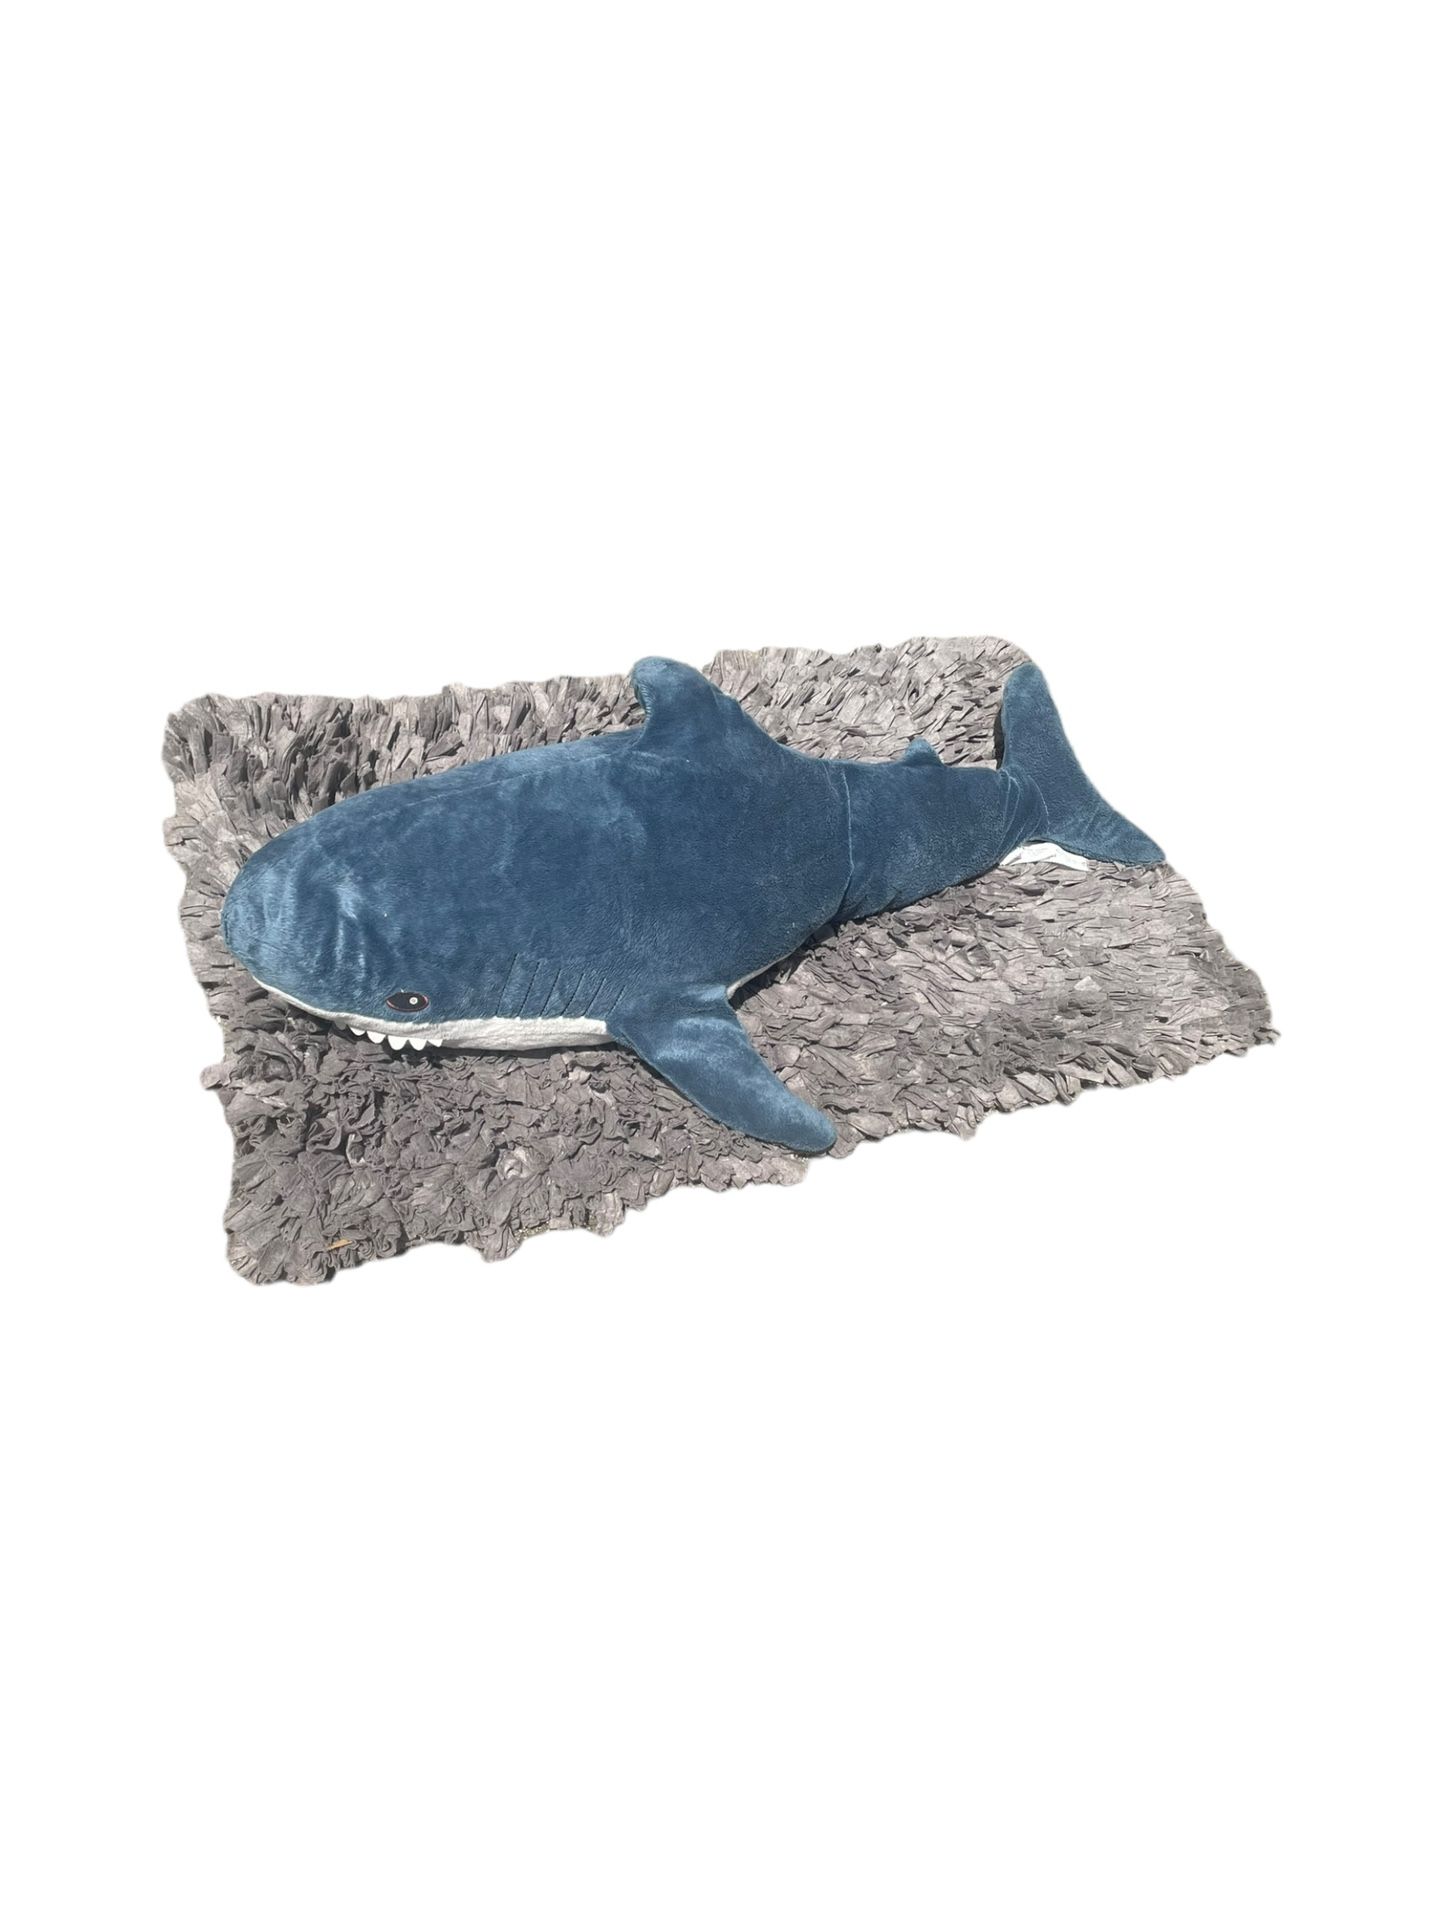 IKEA BLÅHAJ 100cm Blue Shark Soft Toy